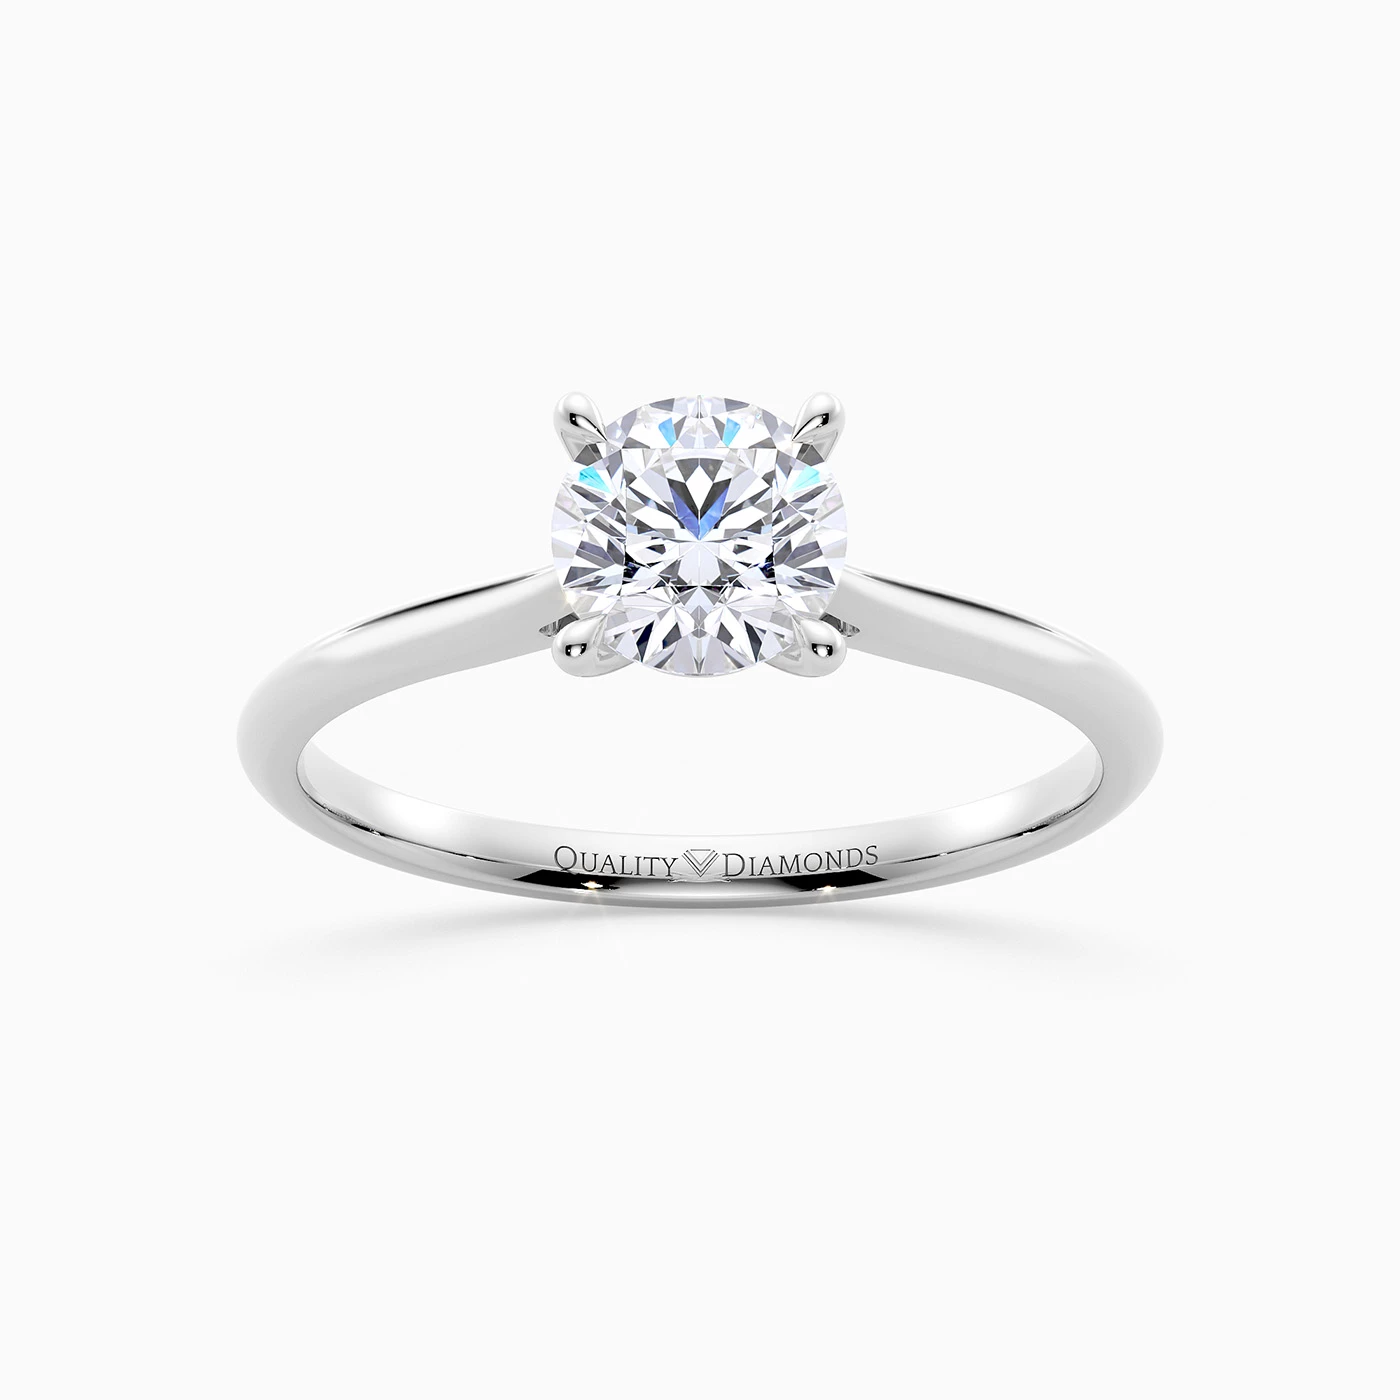 Round Brilliant Carys Diamond Ring in 9K White Gold